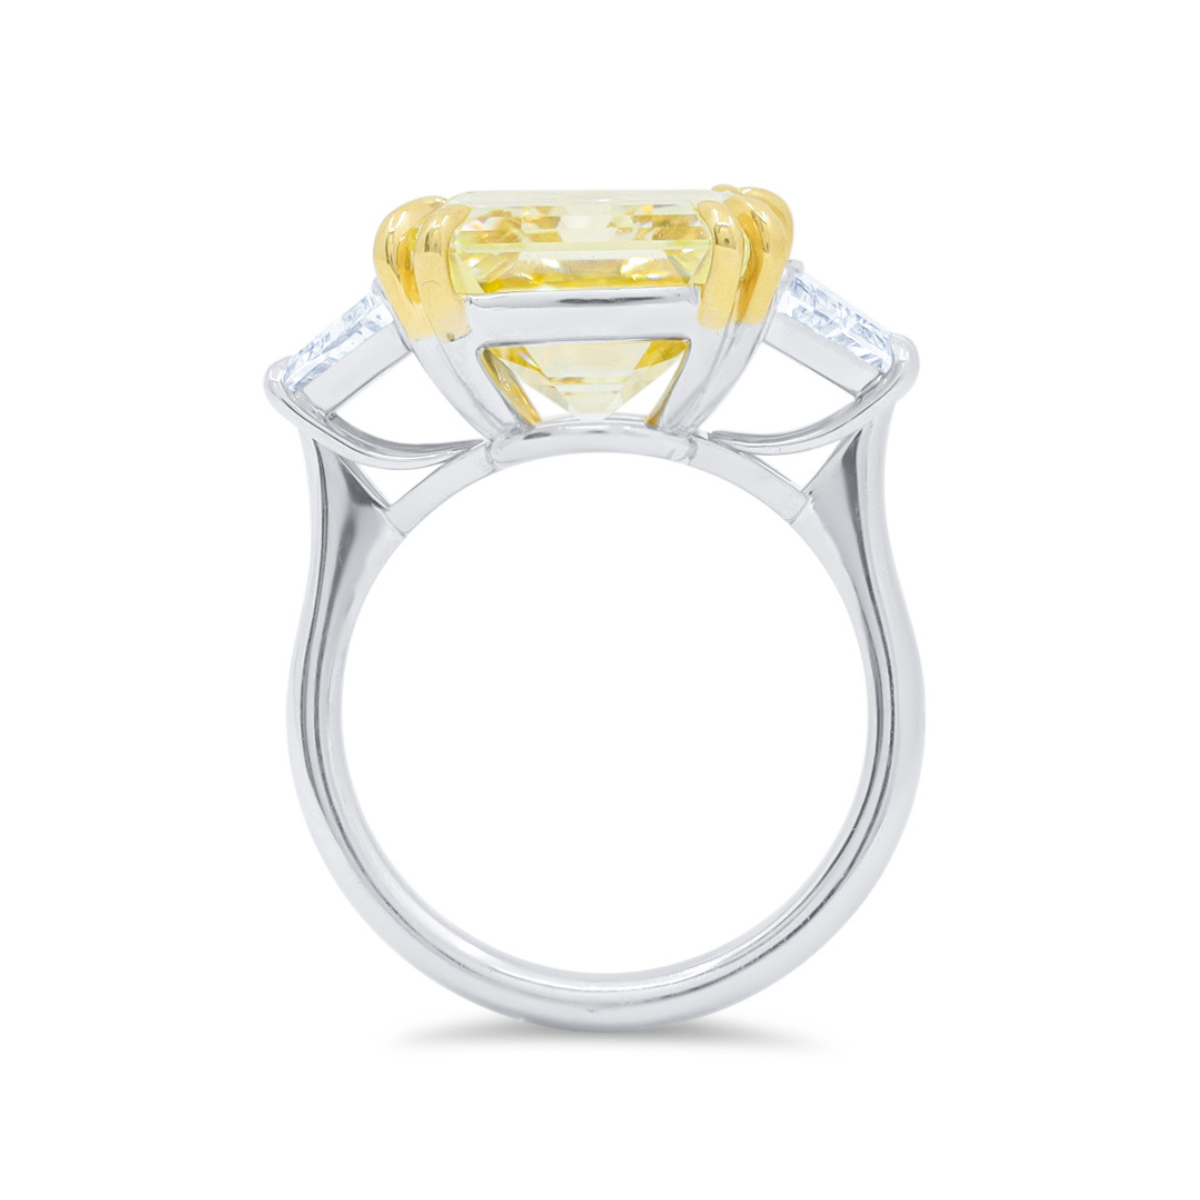 12.27cts Fancy Yellow Emerald Cut Diamond Ring